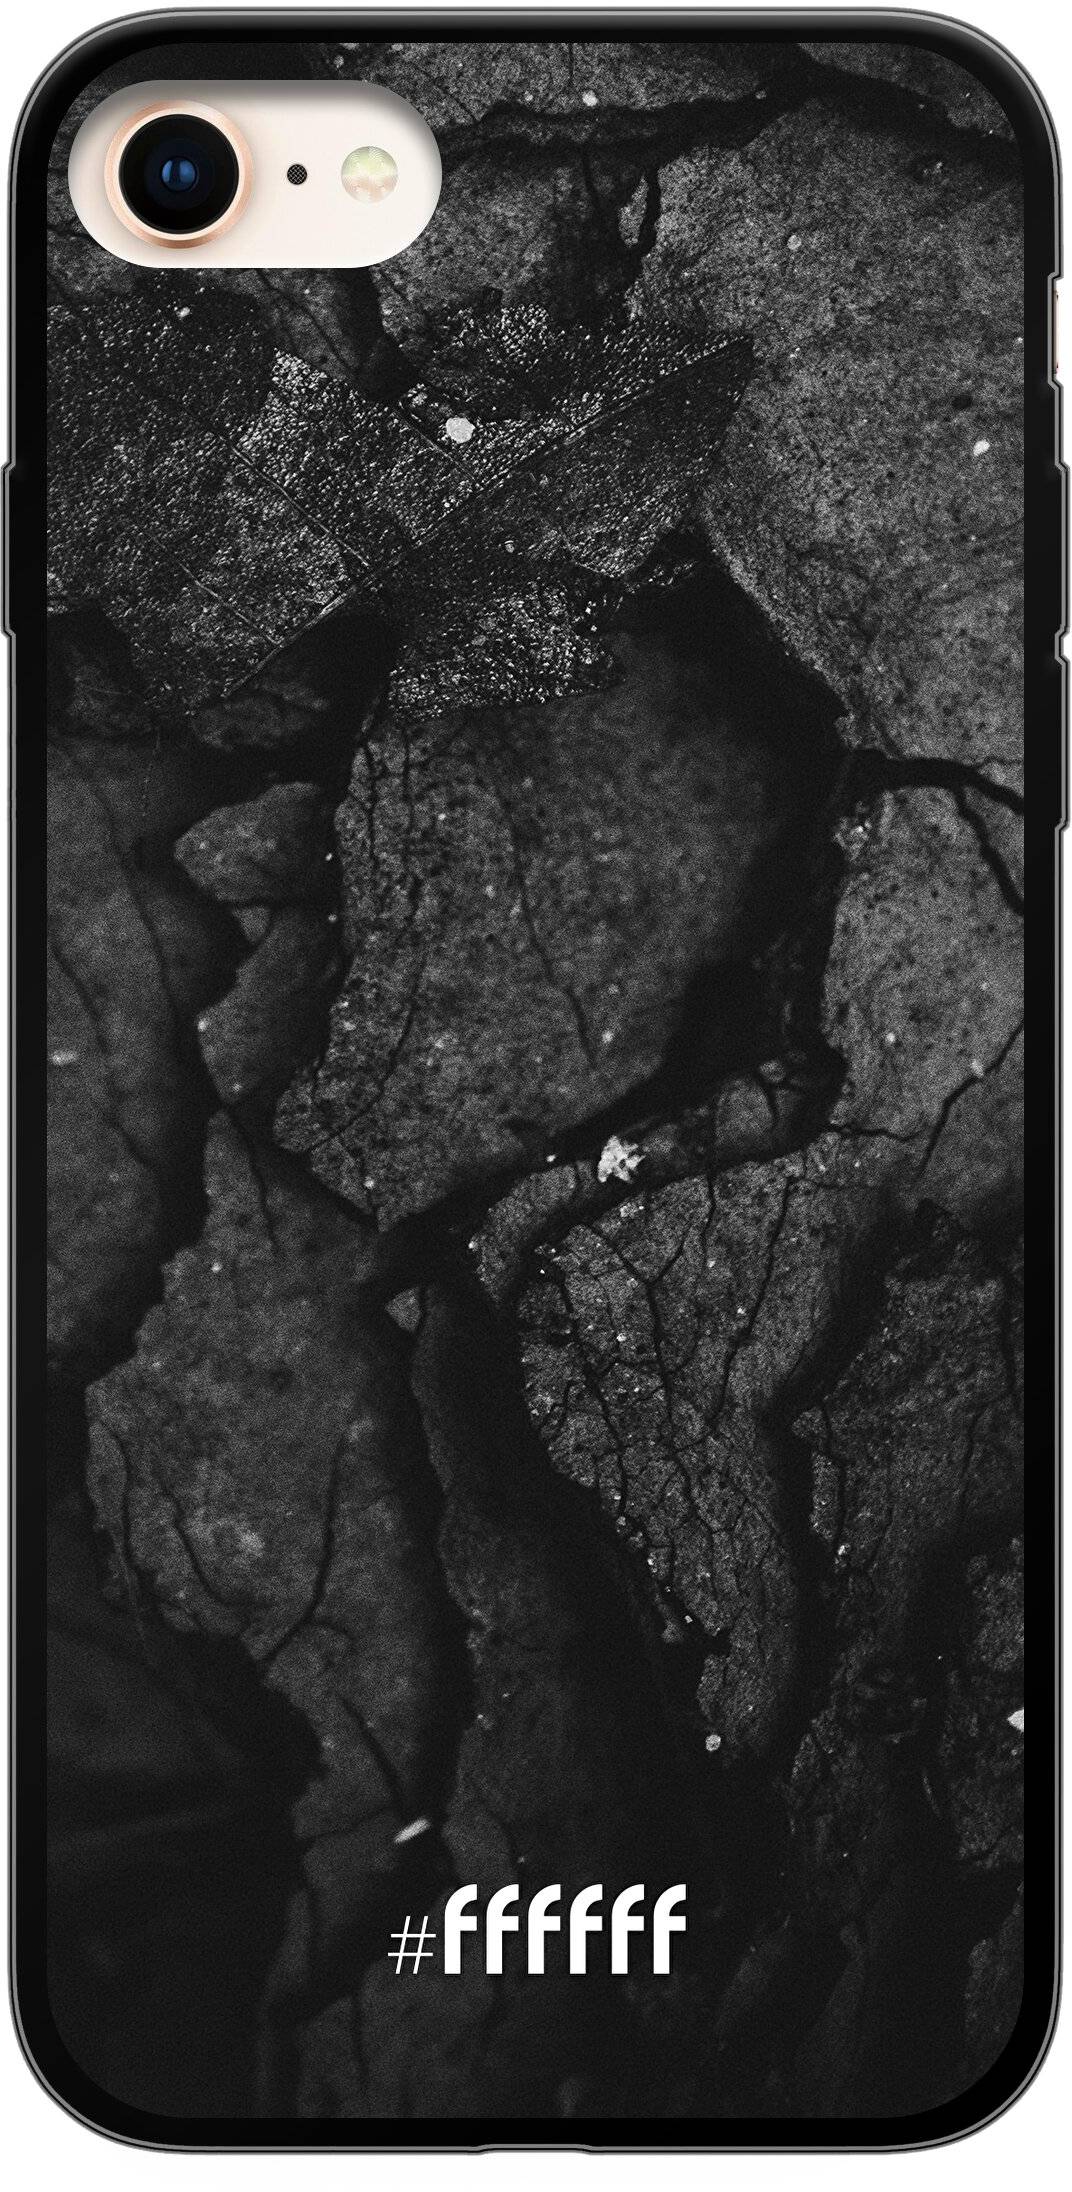 Dark Rock Formation iPhone 7